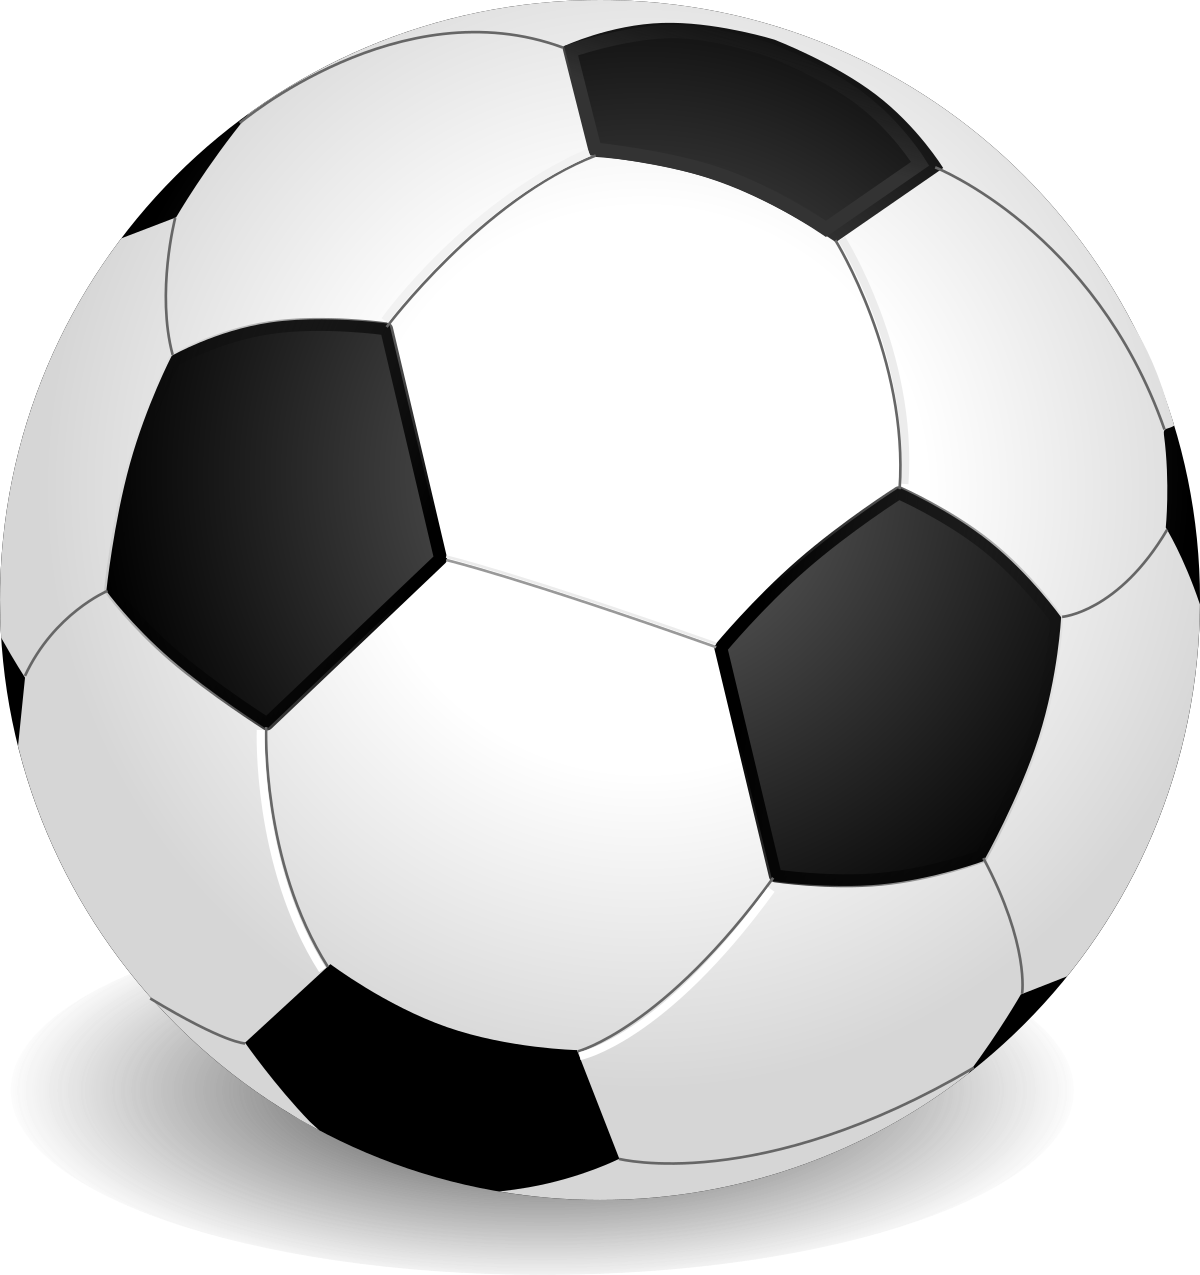 File:Football (soccer ball).svg - Wikimedia Commons